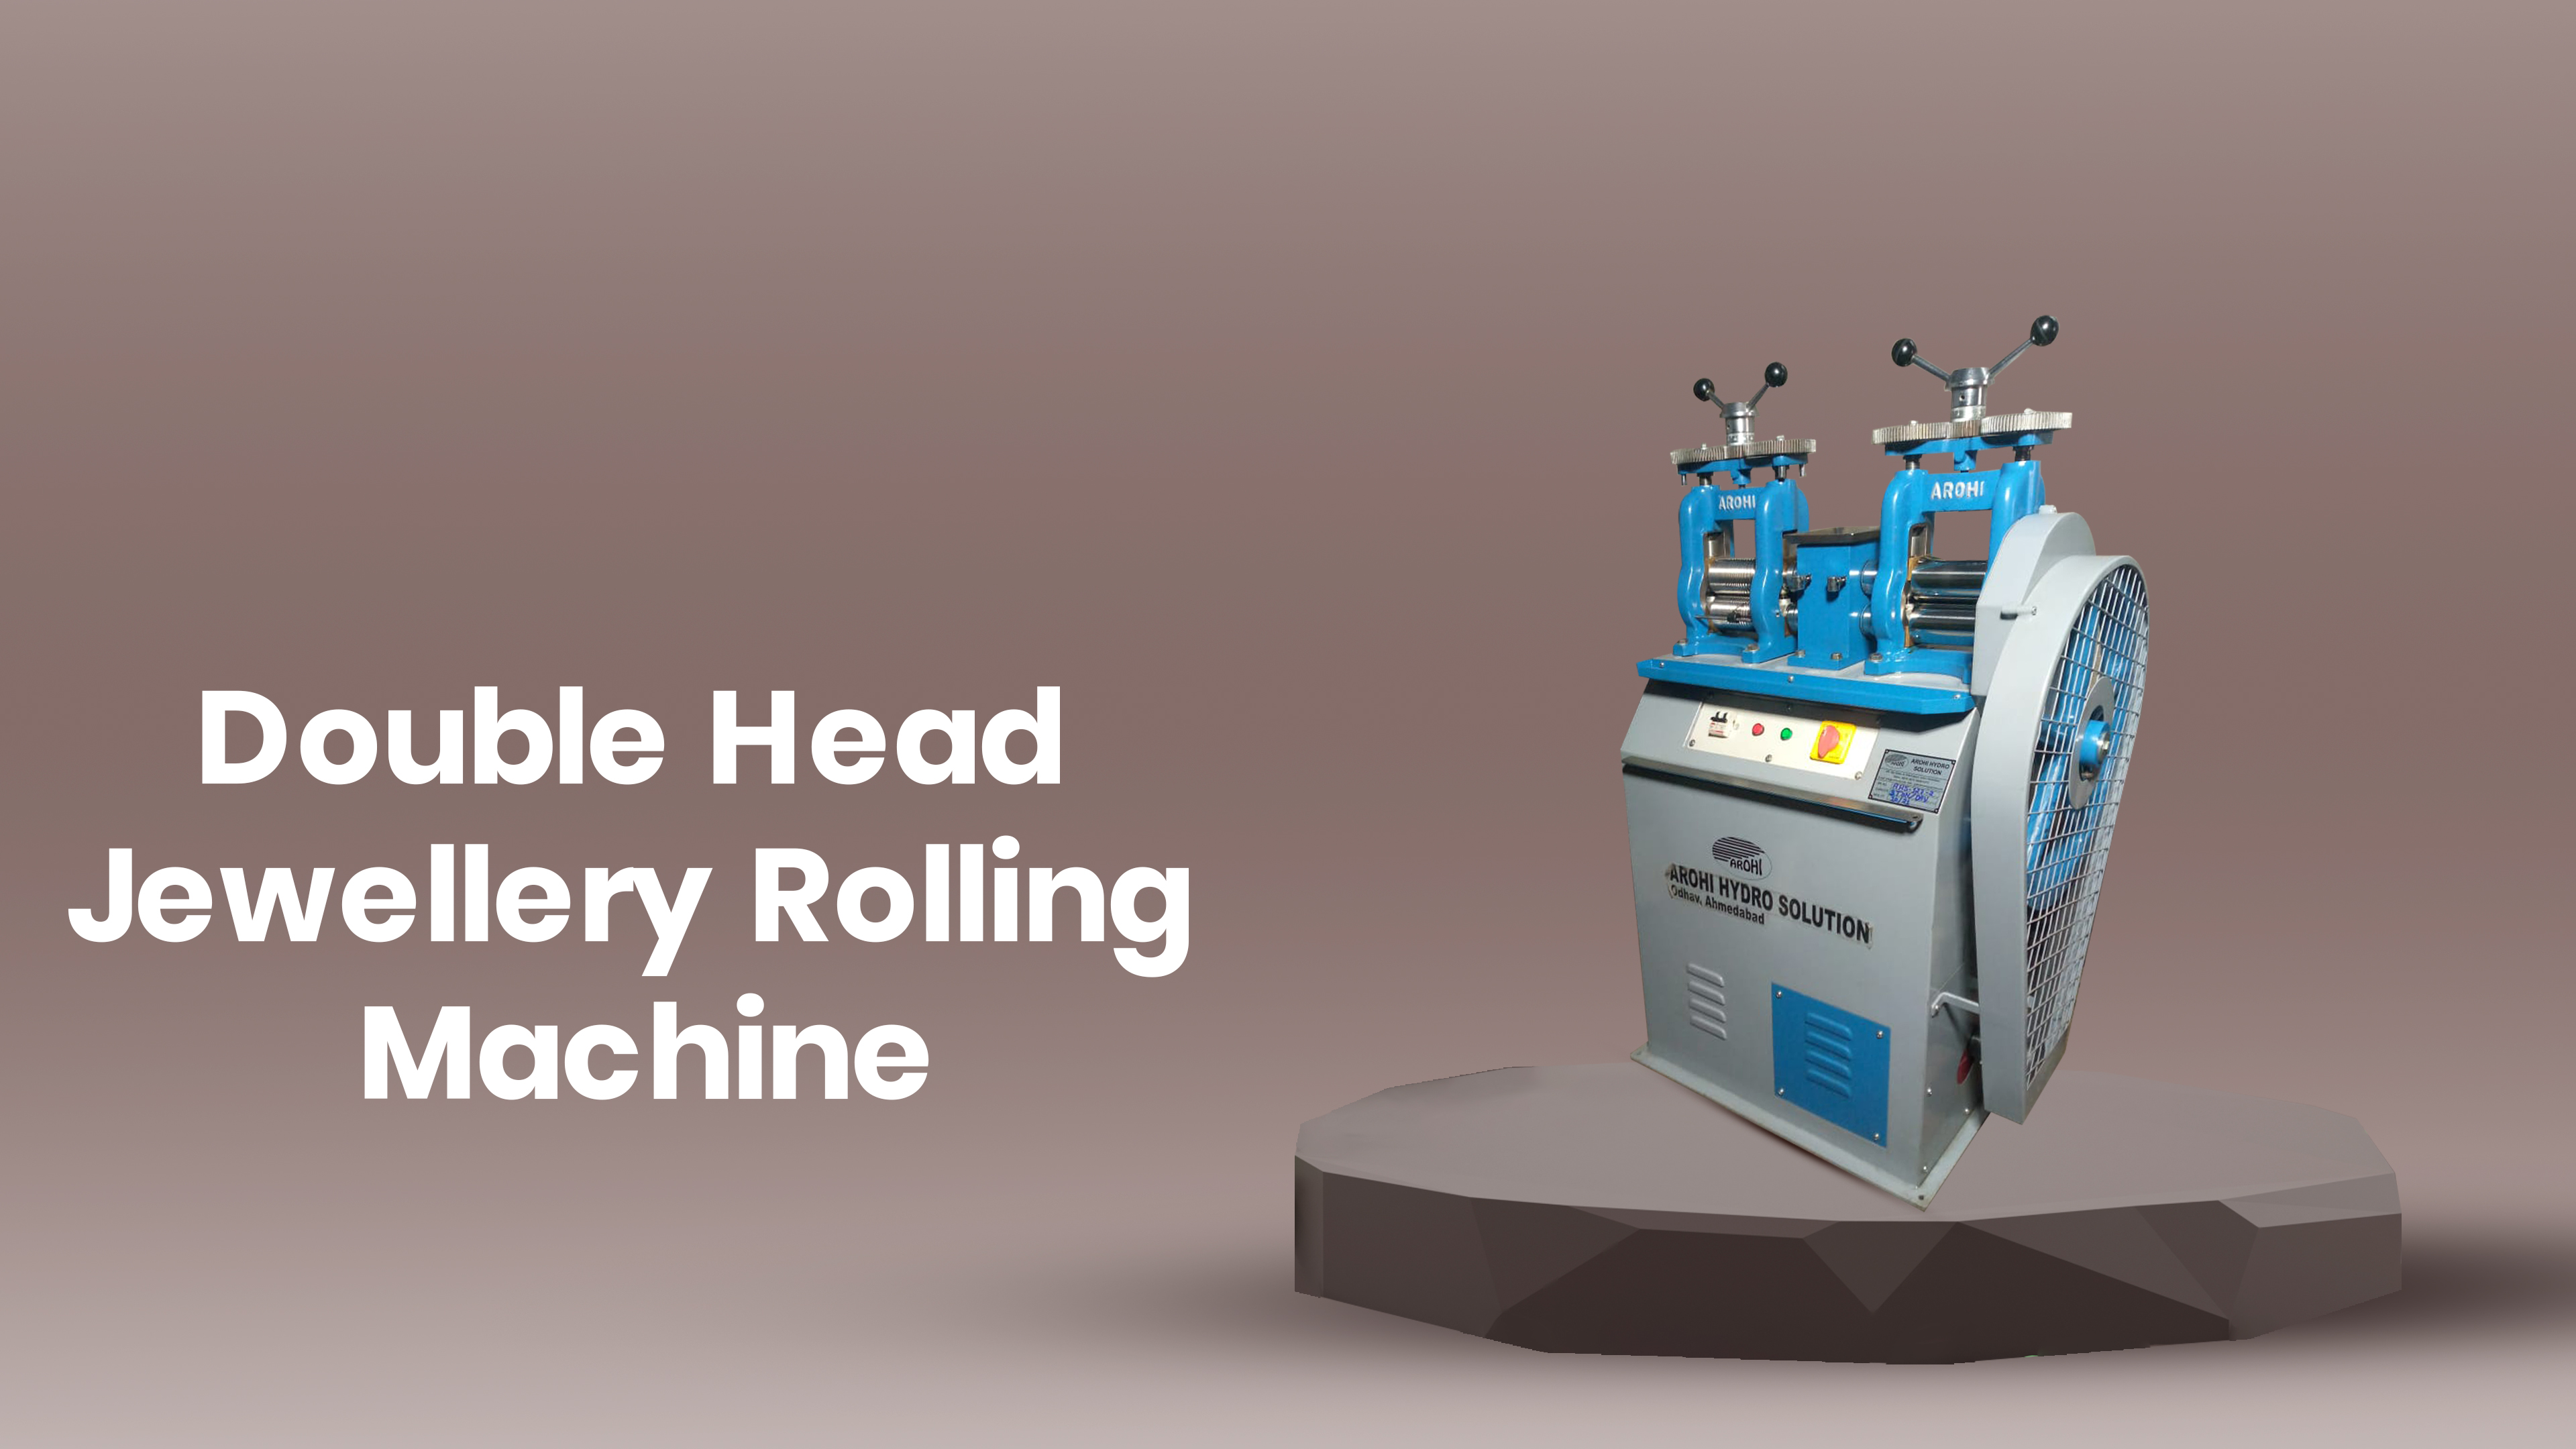 Double Head Jewellery Rolling Machine